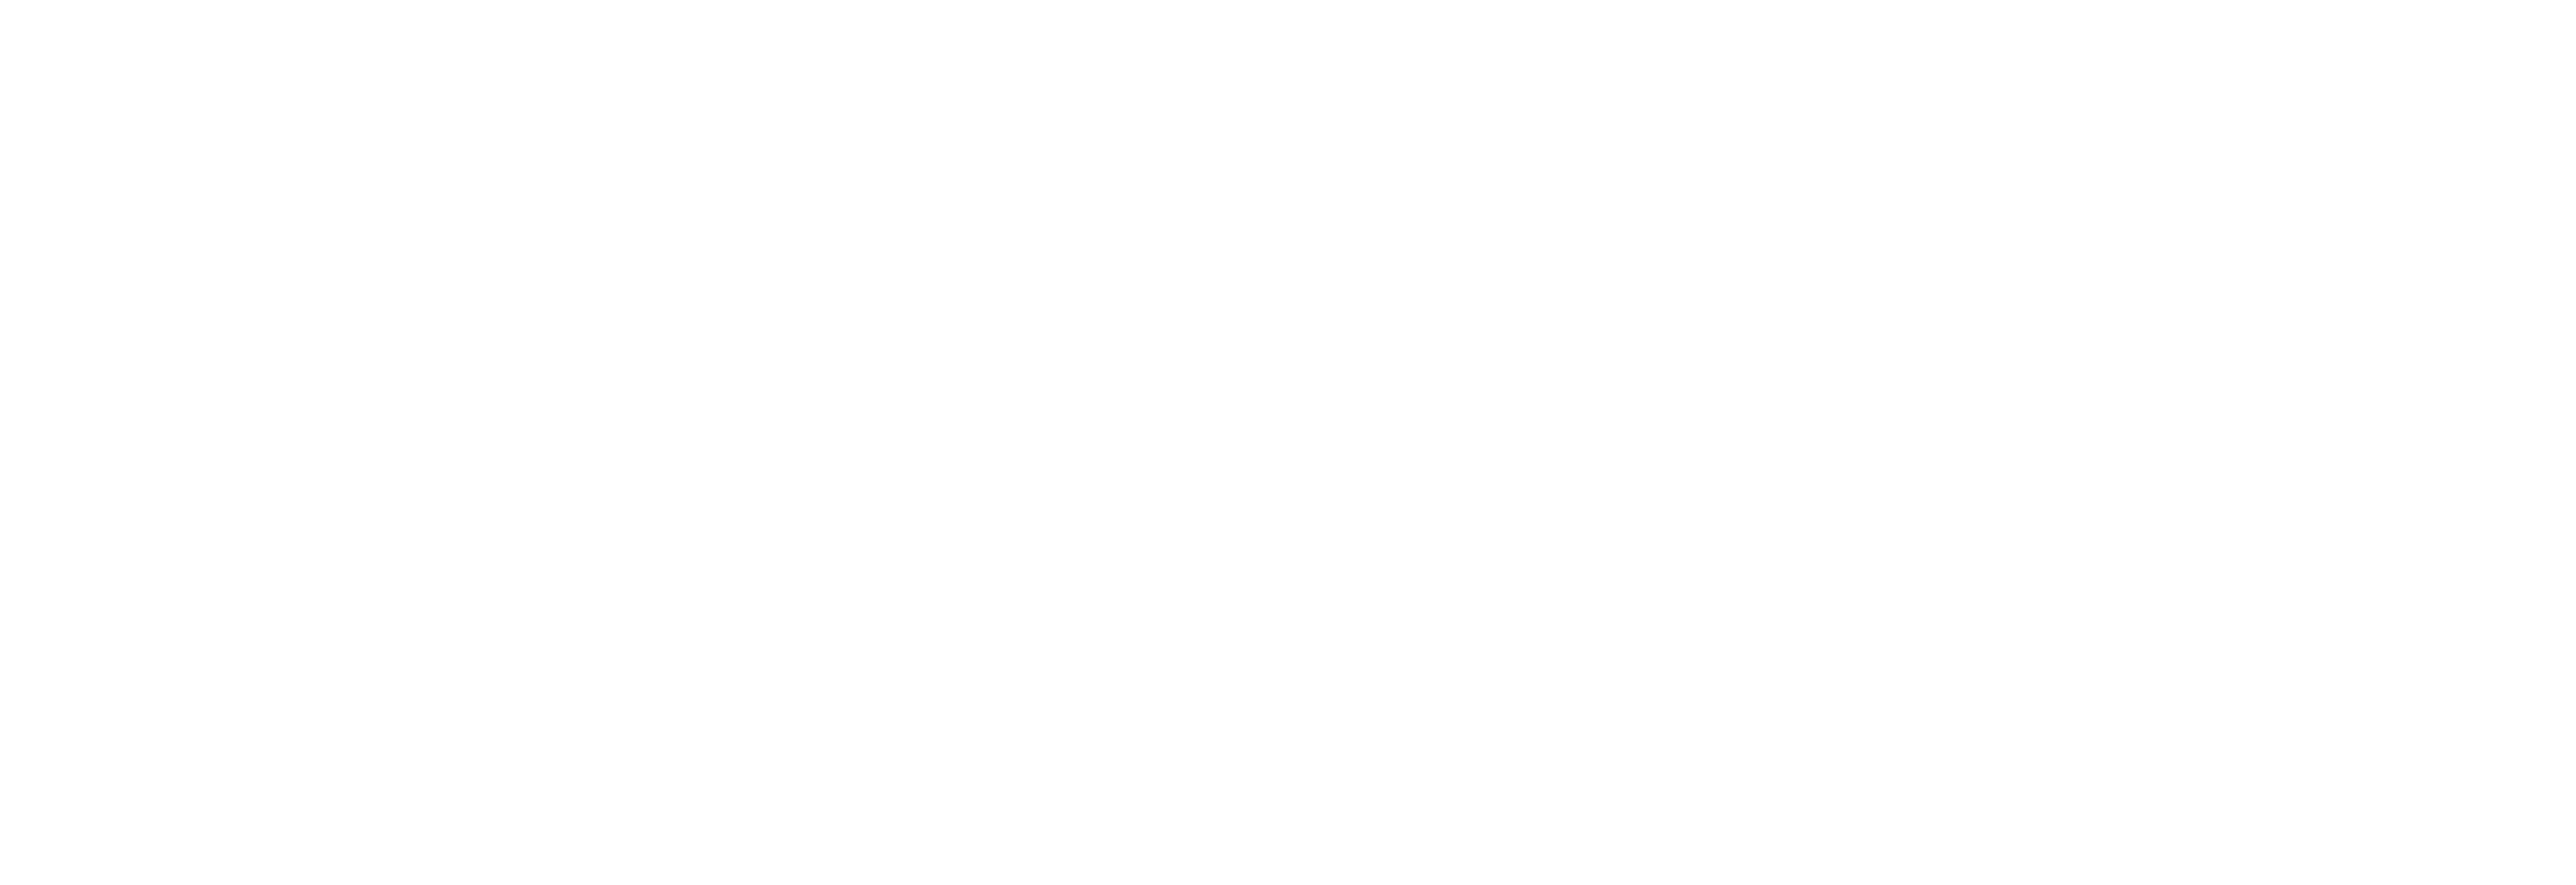 Brdy logo